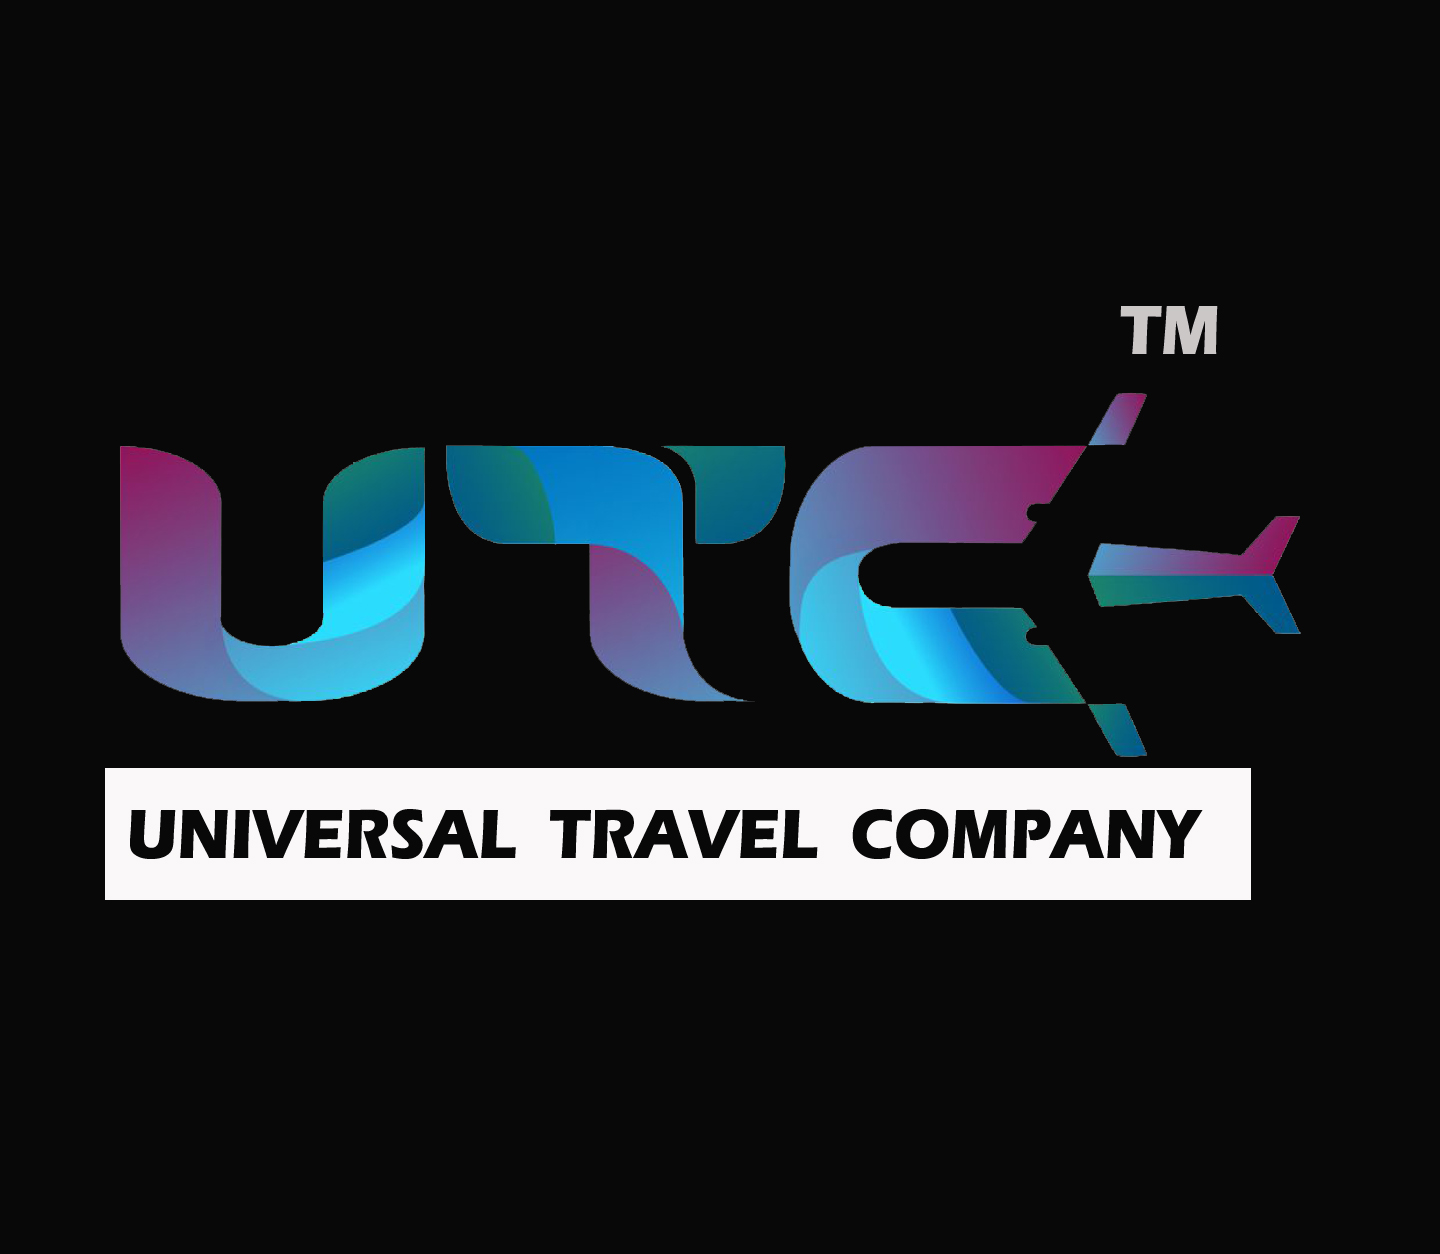 Universal Travel Company